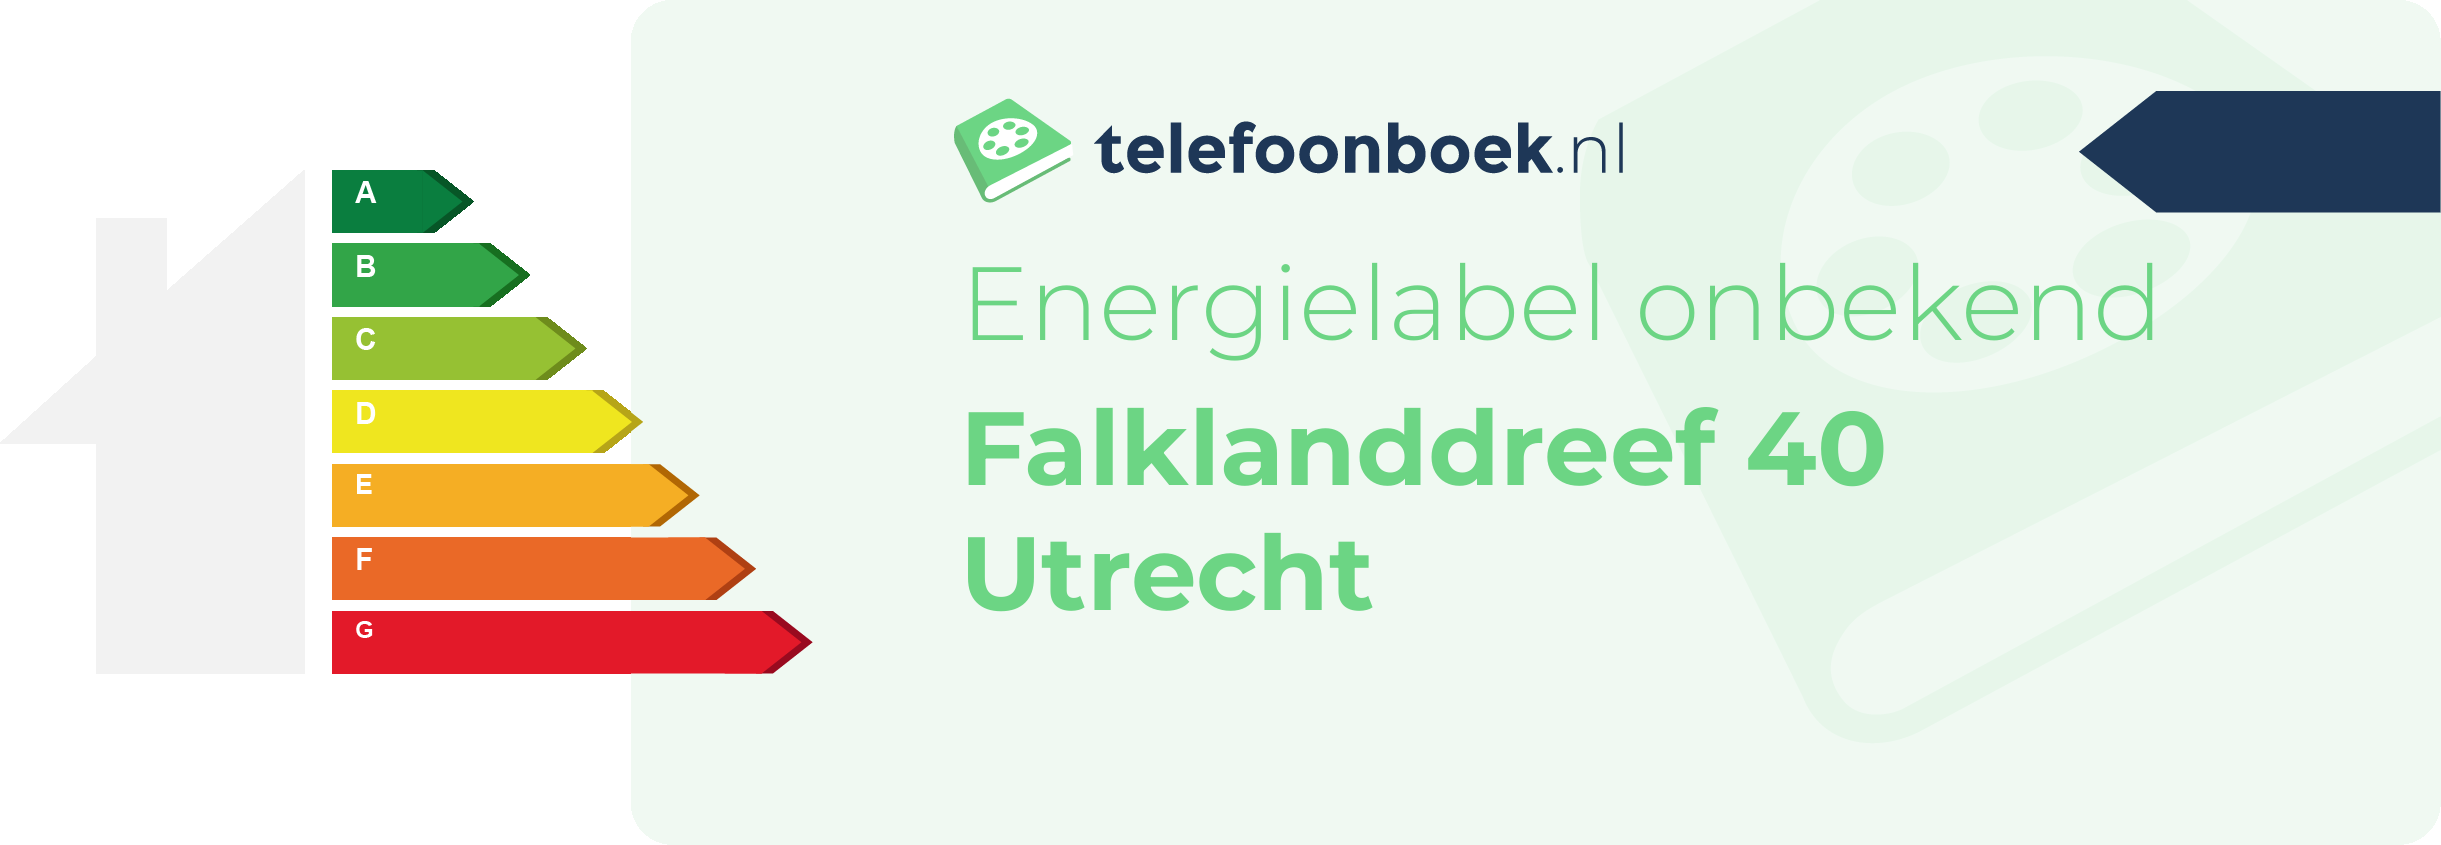 Energielabel Falklanddreef 40 Utrecht